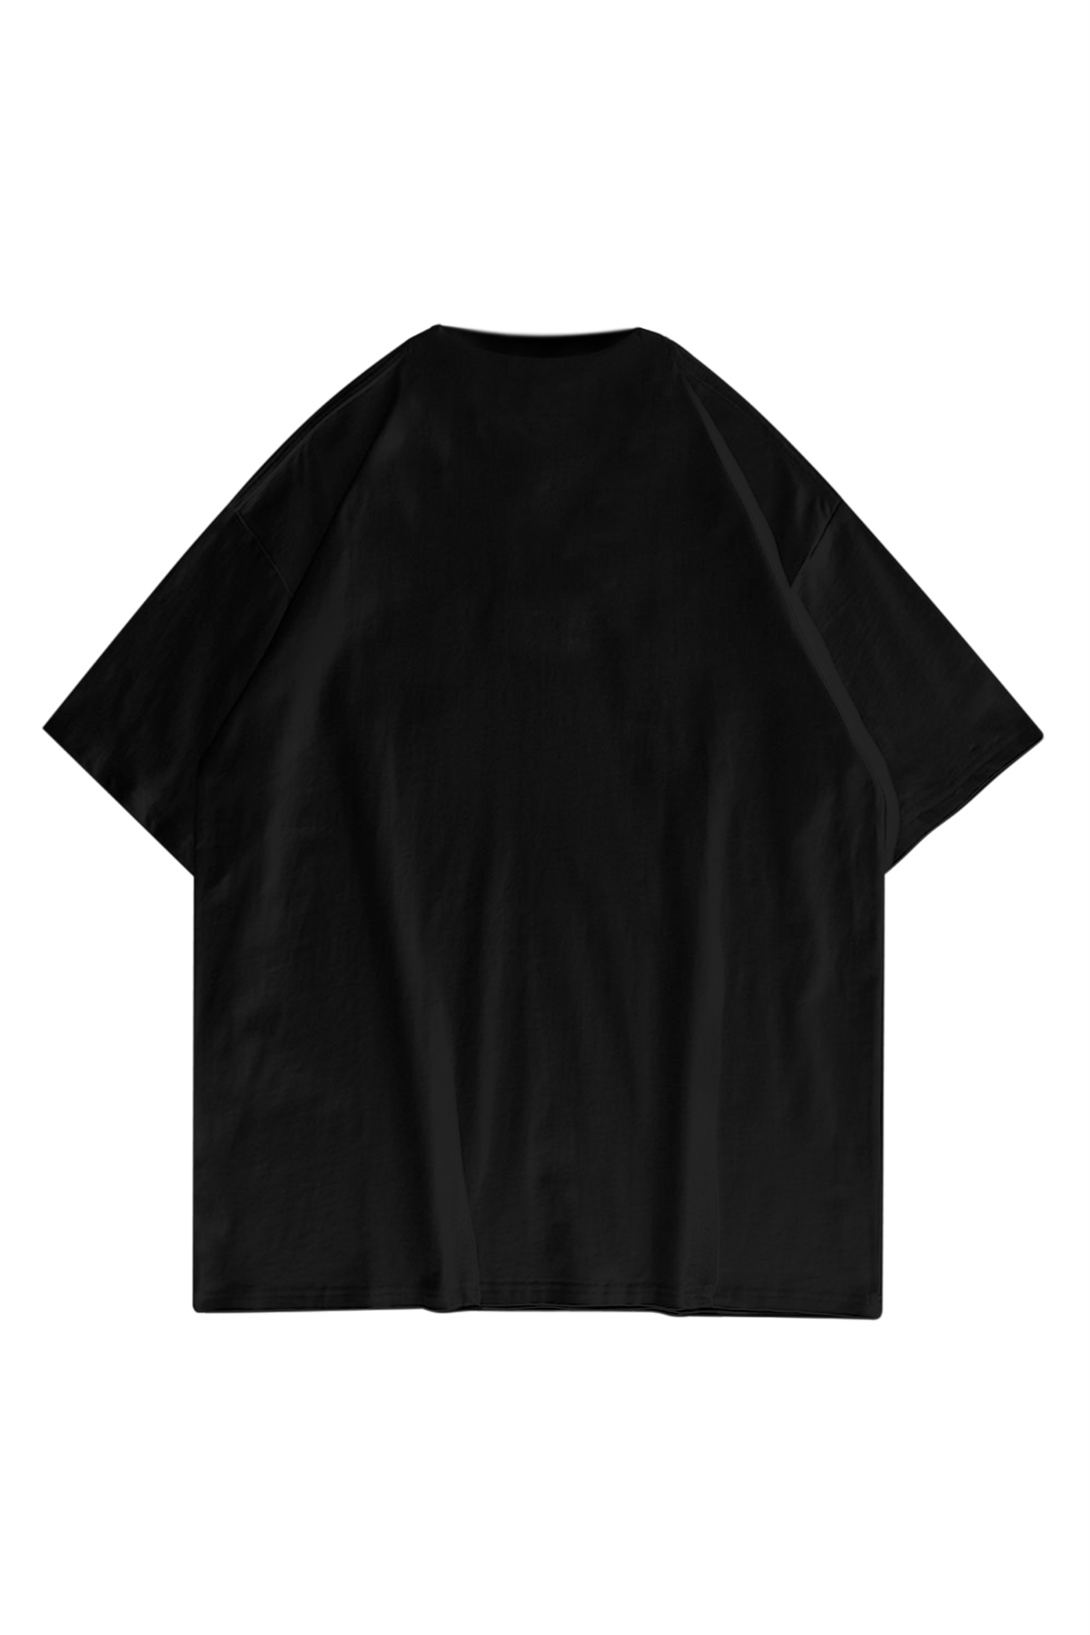 Trendiz Unisex Cactus Jack 202 Siyah Tshirt